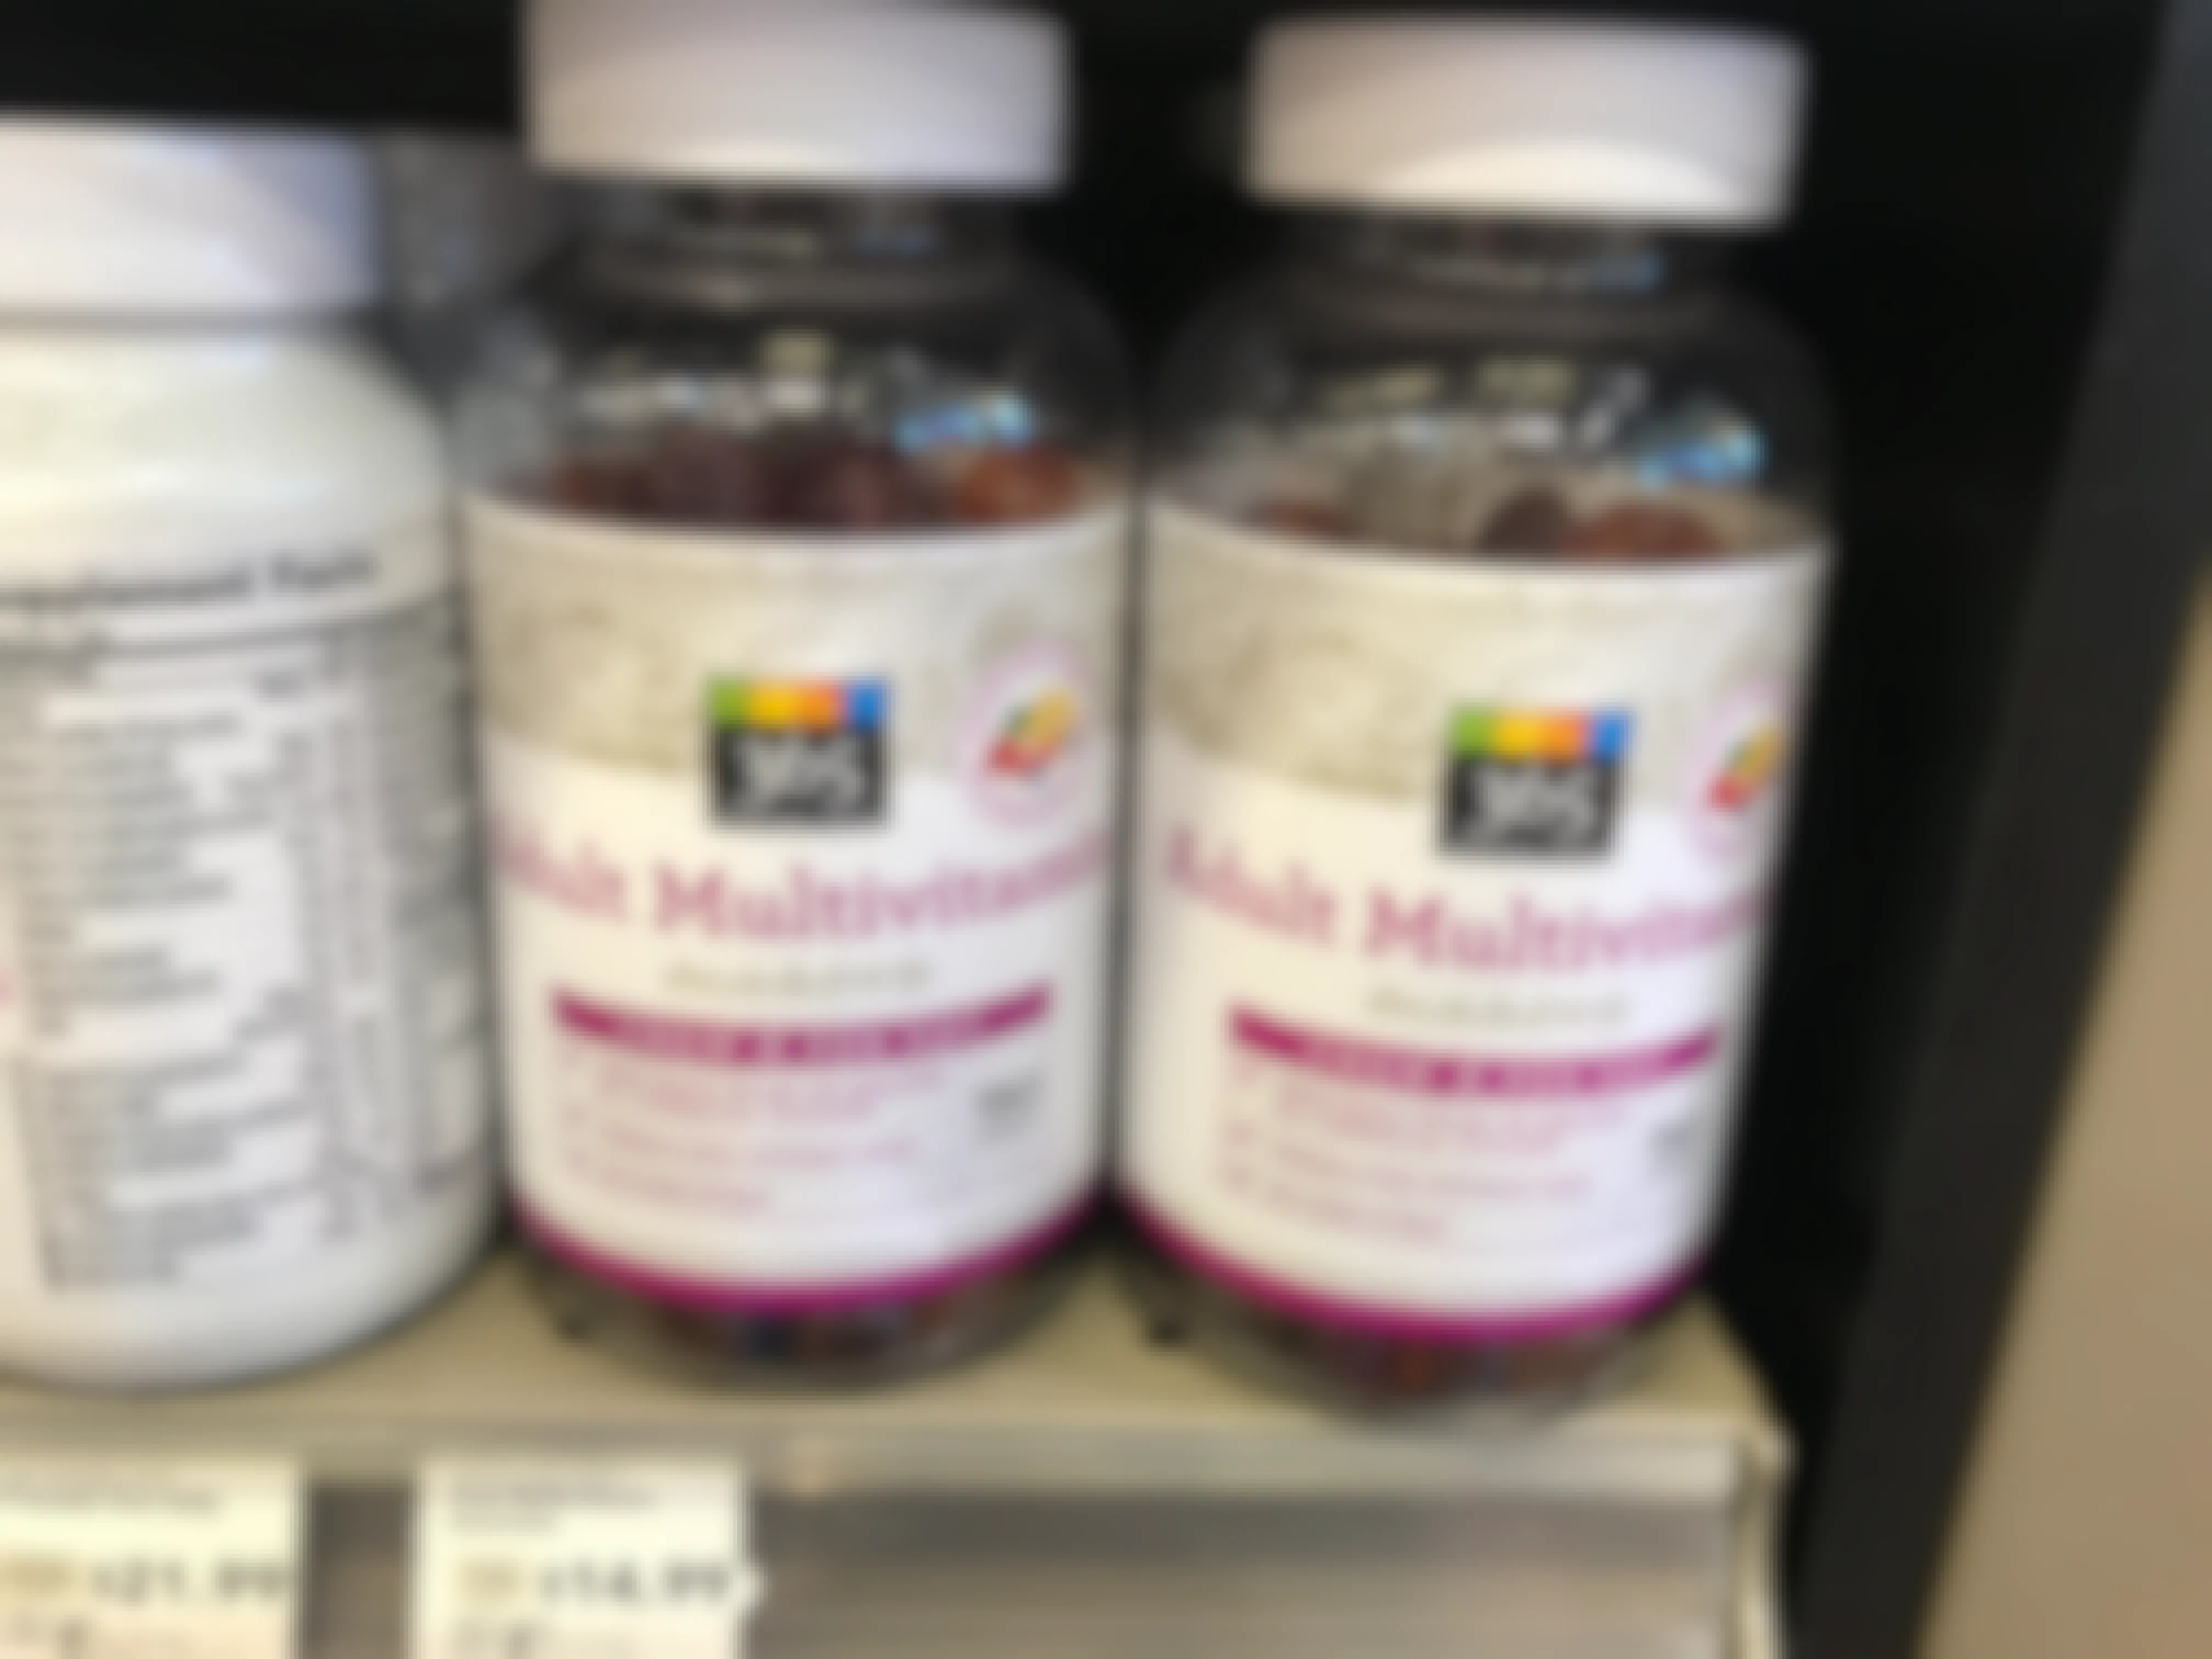 Whole Foods 365 gummy multivitamins on a shelf.